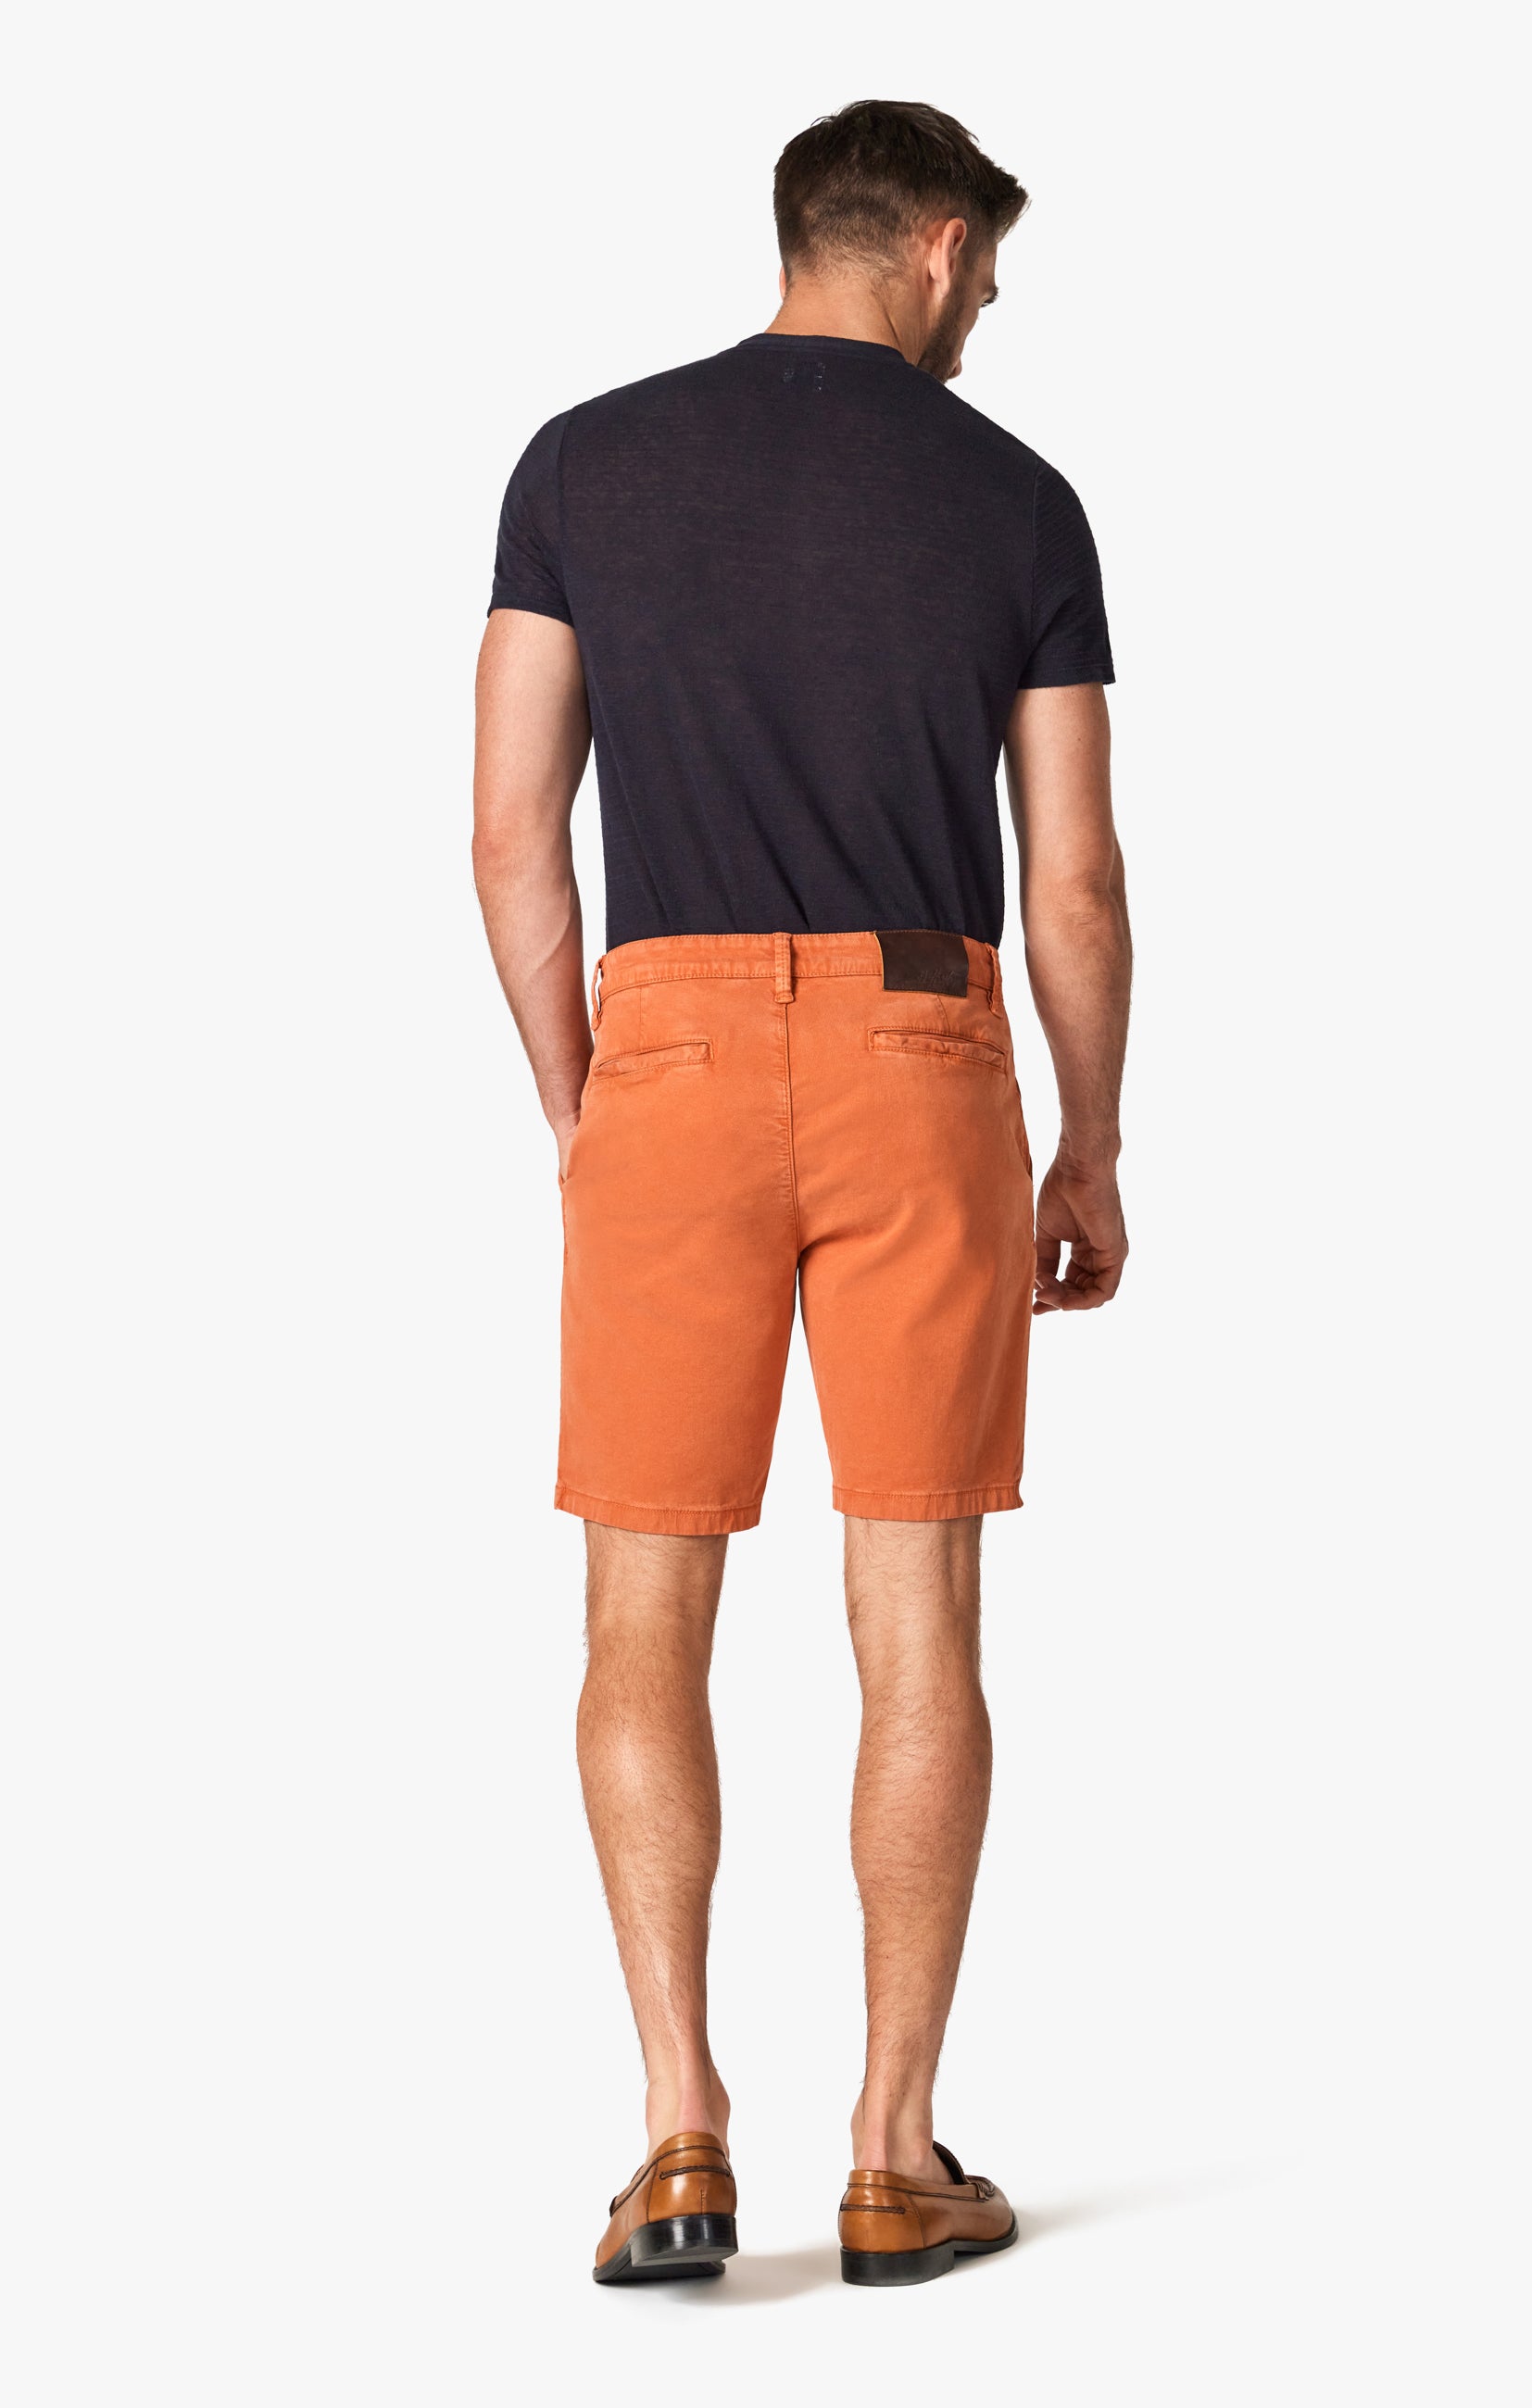 Arizona Shorts In Orange Rust Soft Touch Image 3